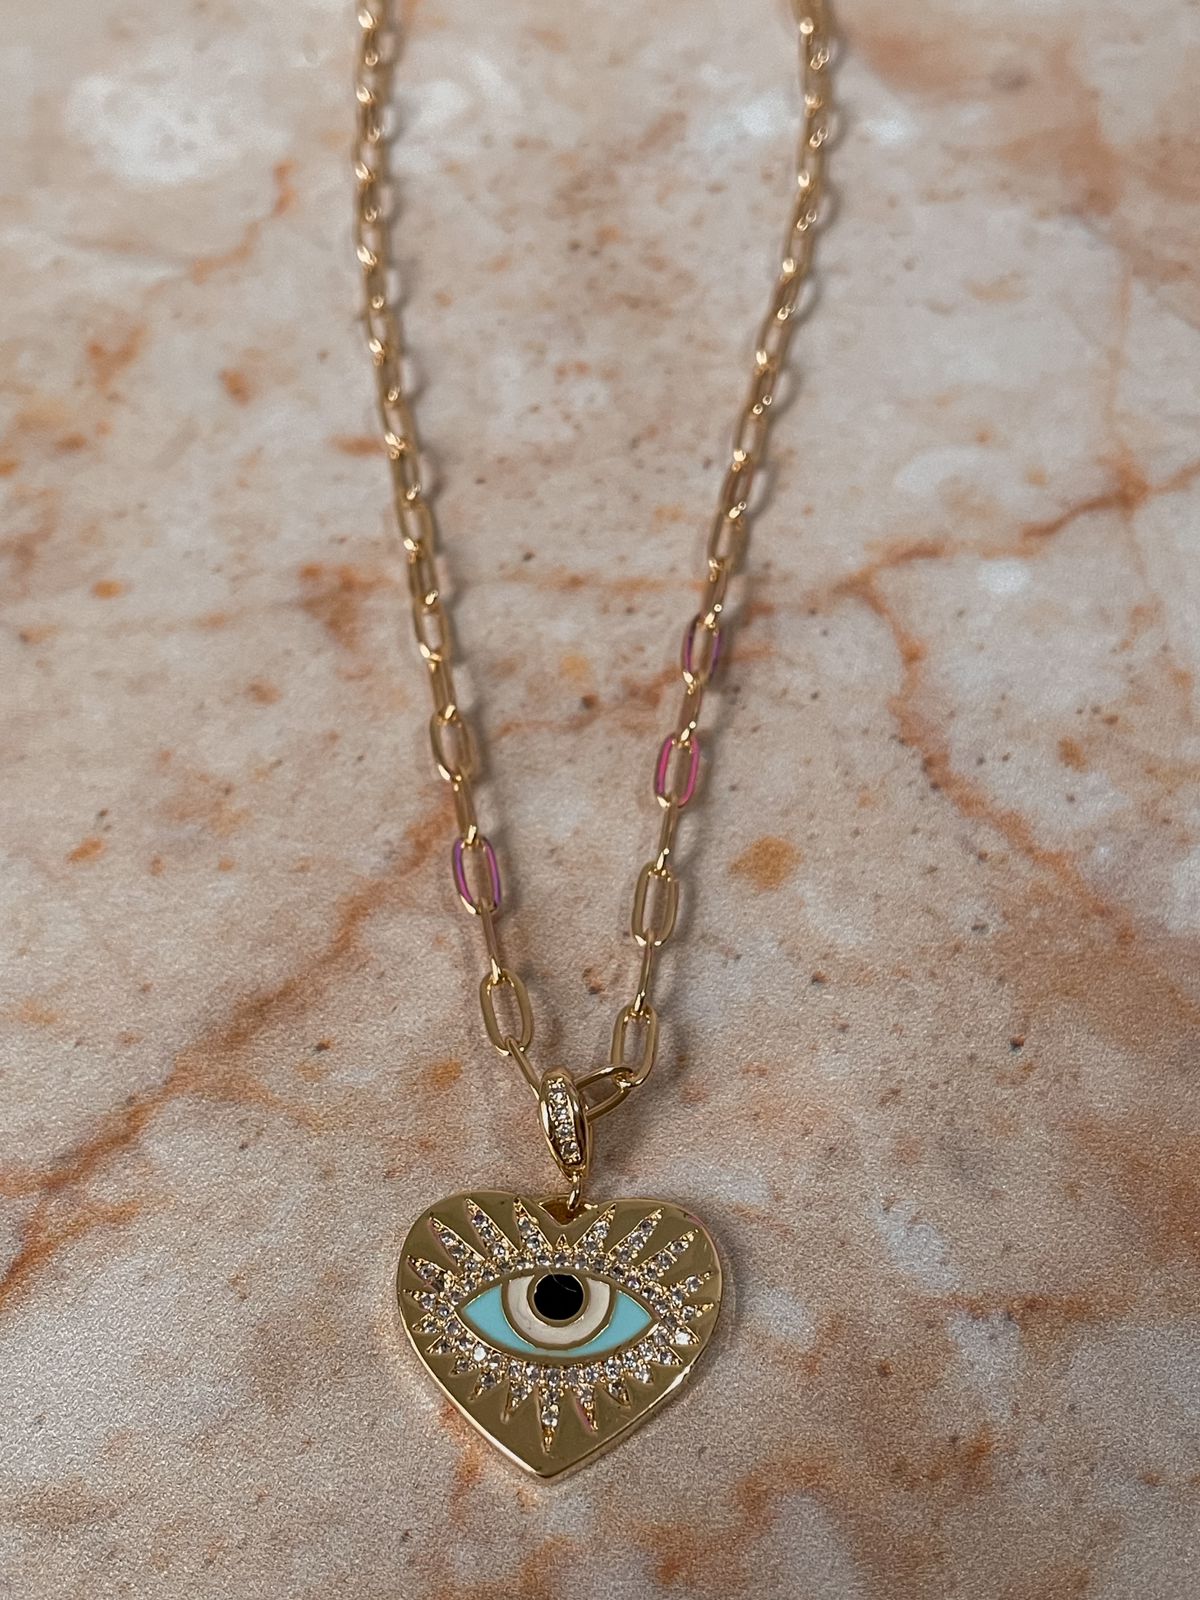 Corazon+ojoturco necklace